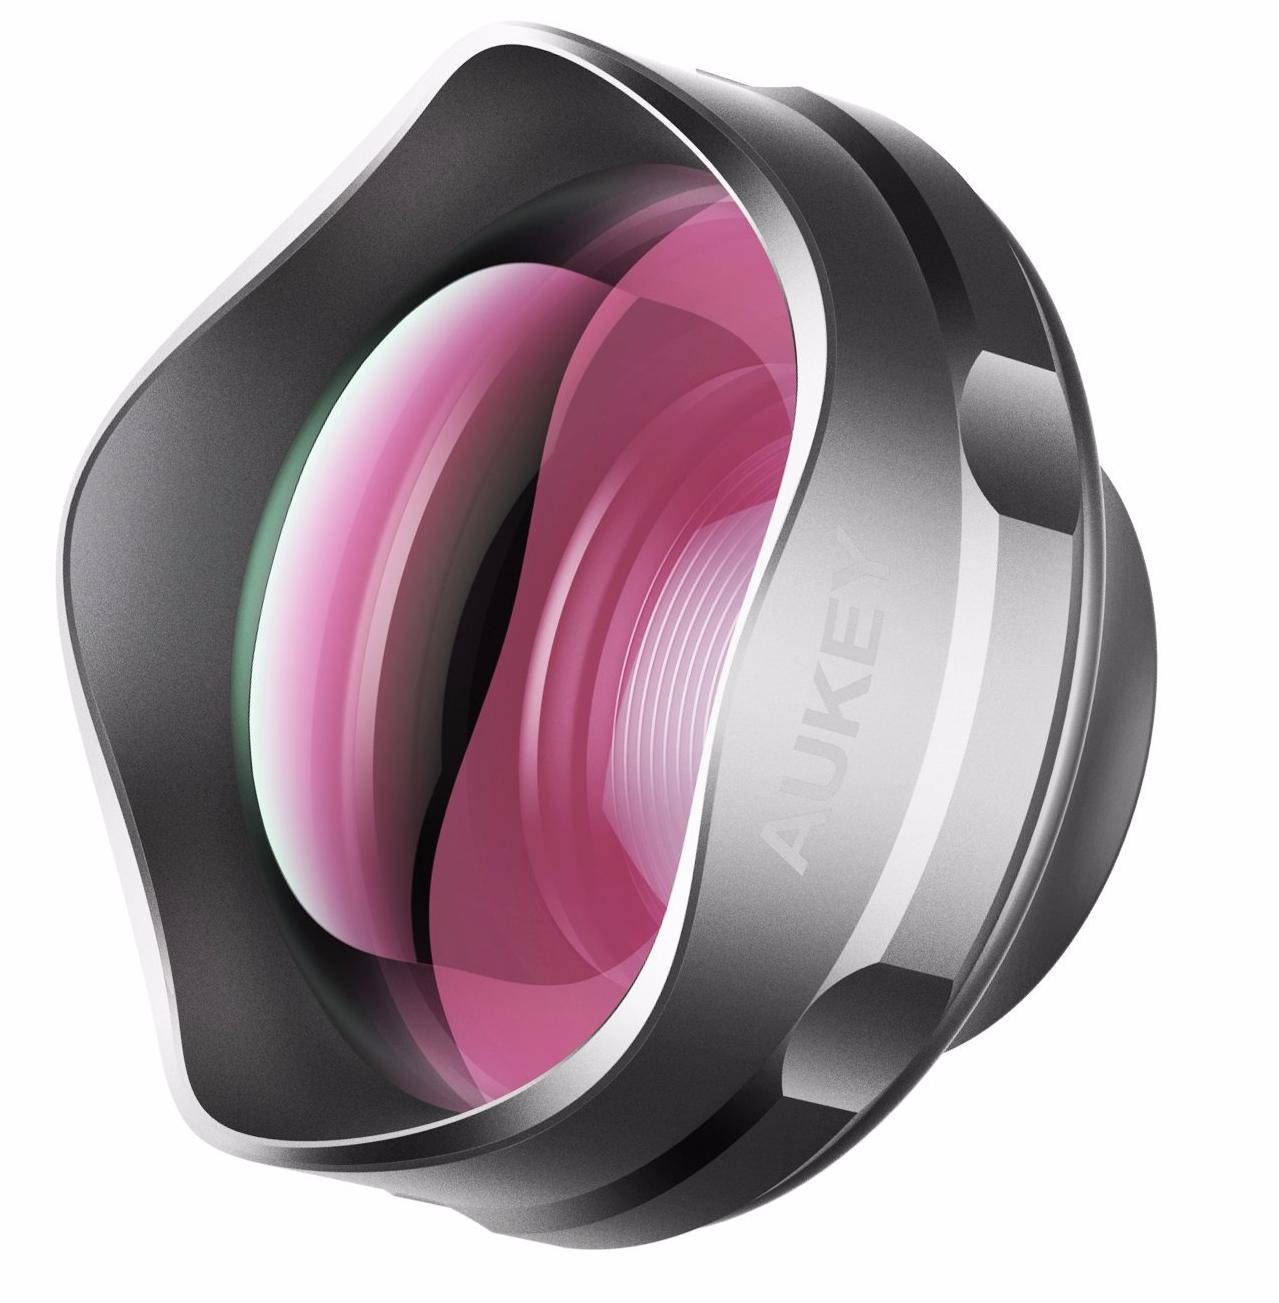 Aukey Optic Pro 3X Telephoto Lens (PL-BL02) - объектив для мобильных устройств (Black)